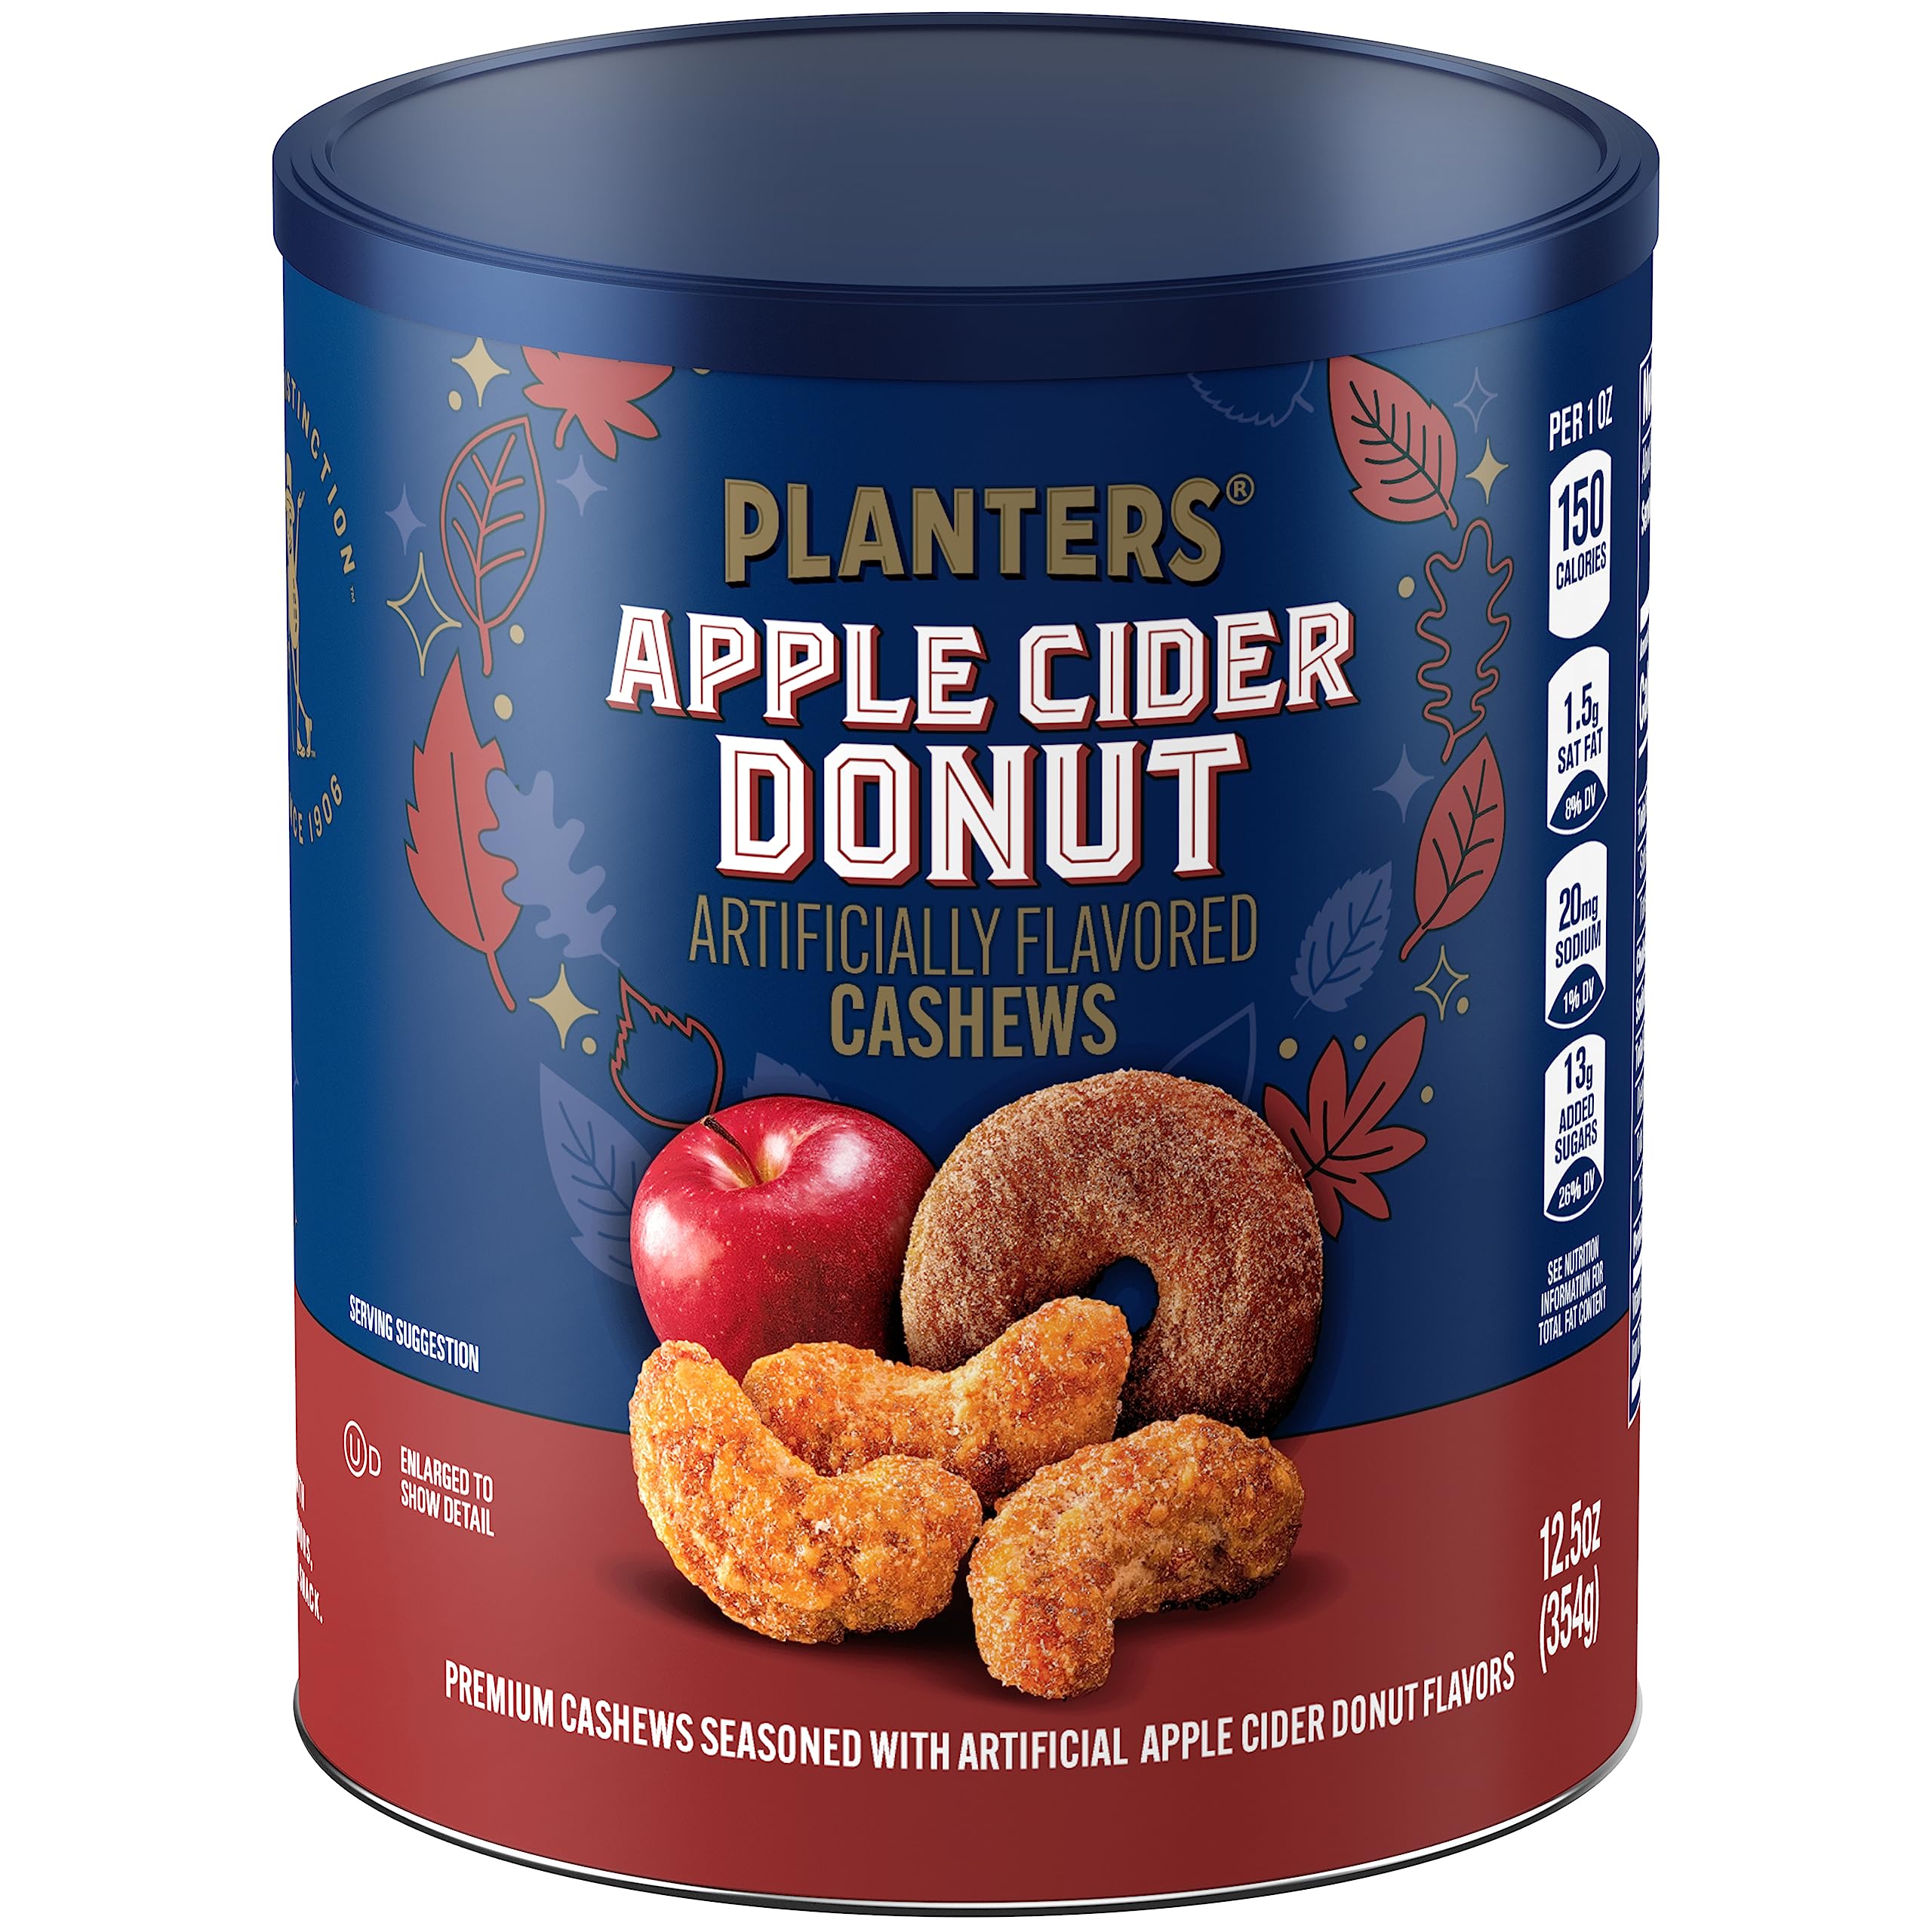 $7.49: 12.5-Oz Planters Apple Cider Donut Cashews